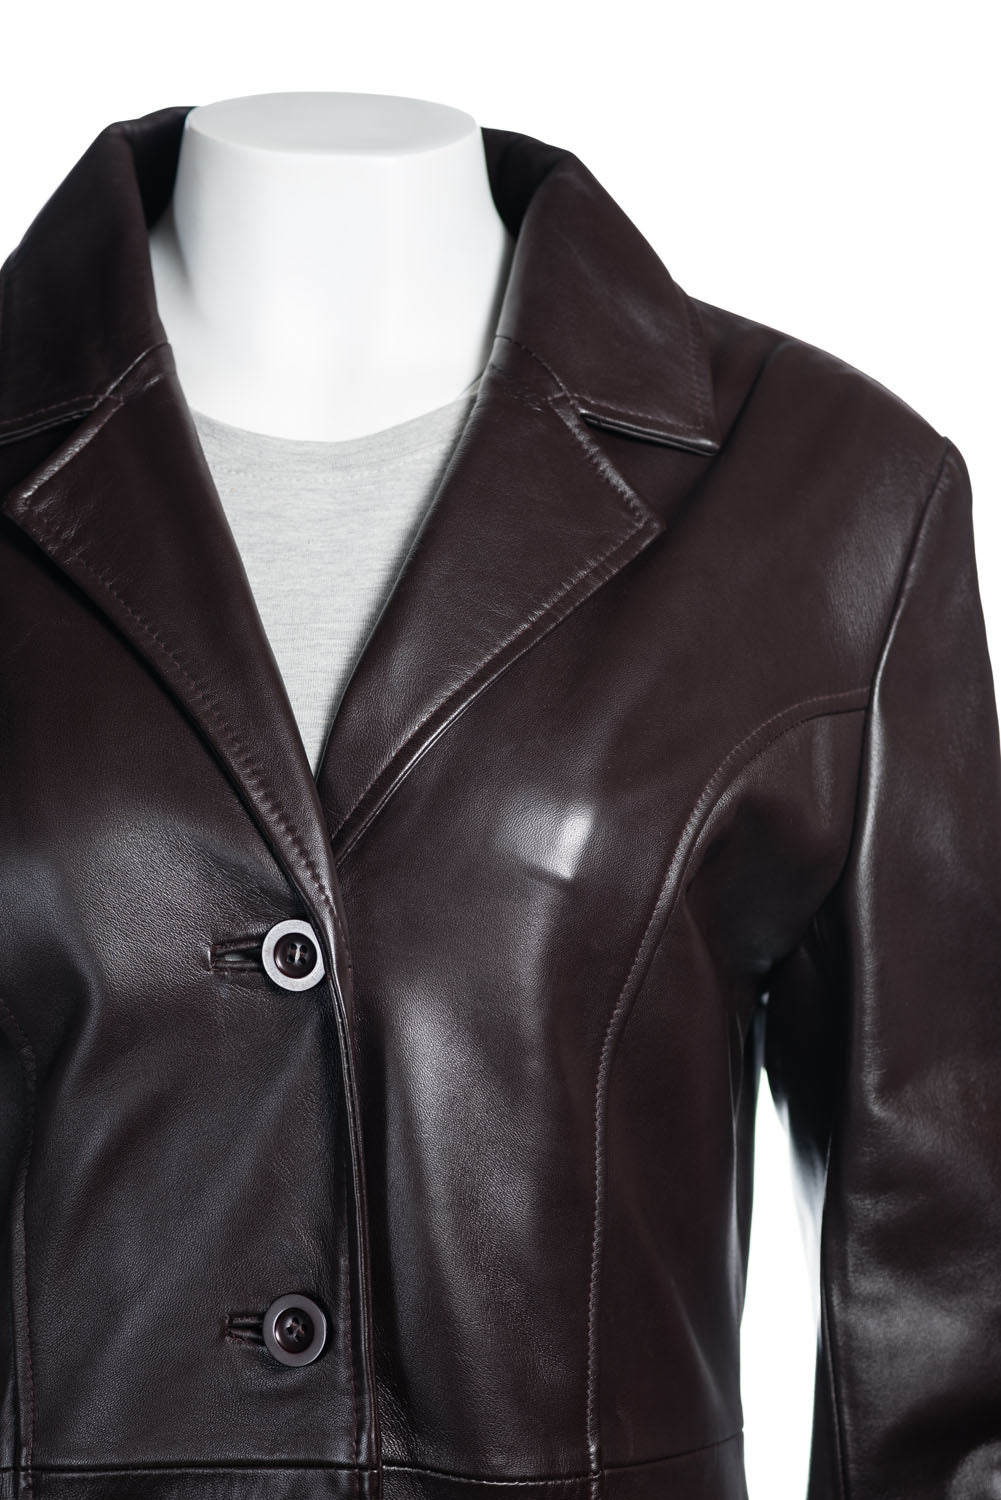 Ladies Full Length Classic Brown Leather Coat: Vita